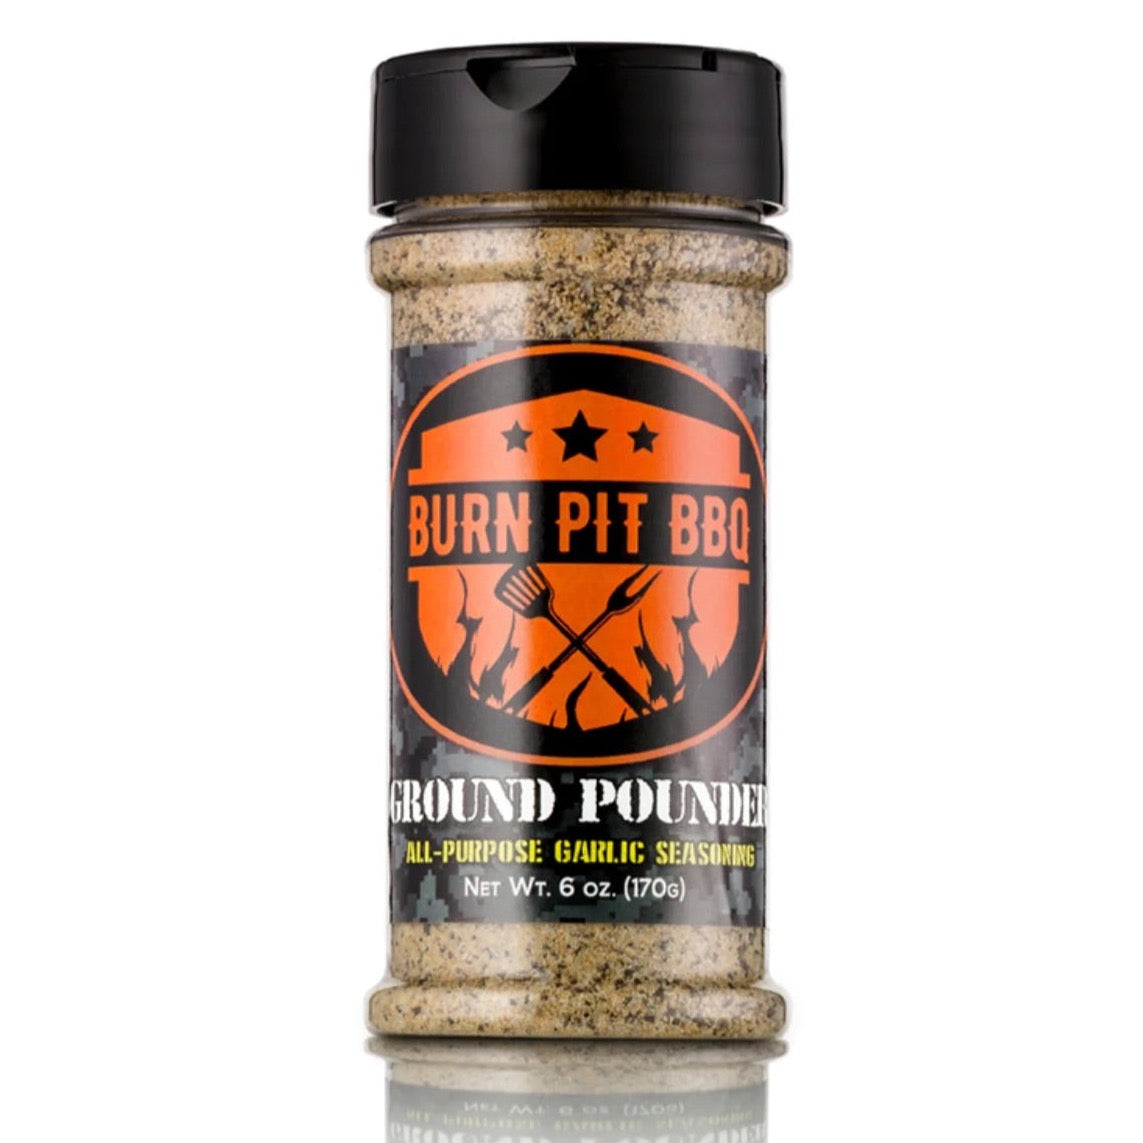 Burn Pit BBQ Ground Pounder Seasoning